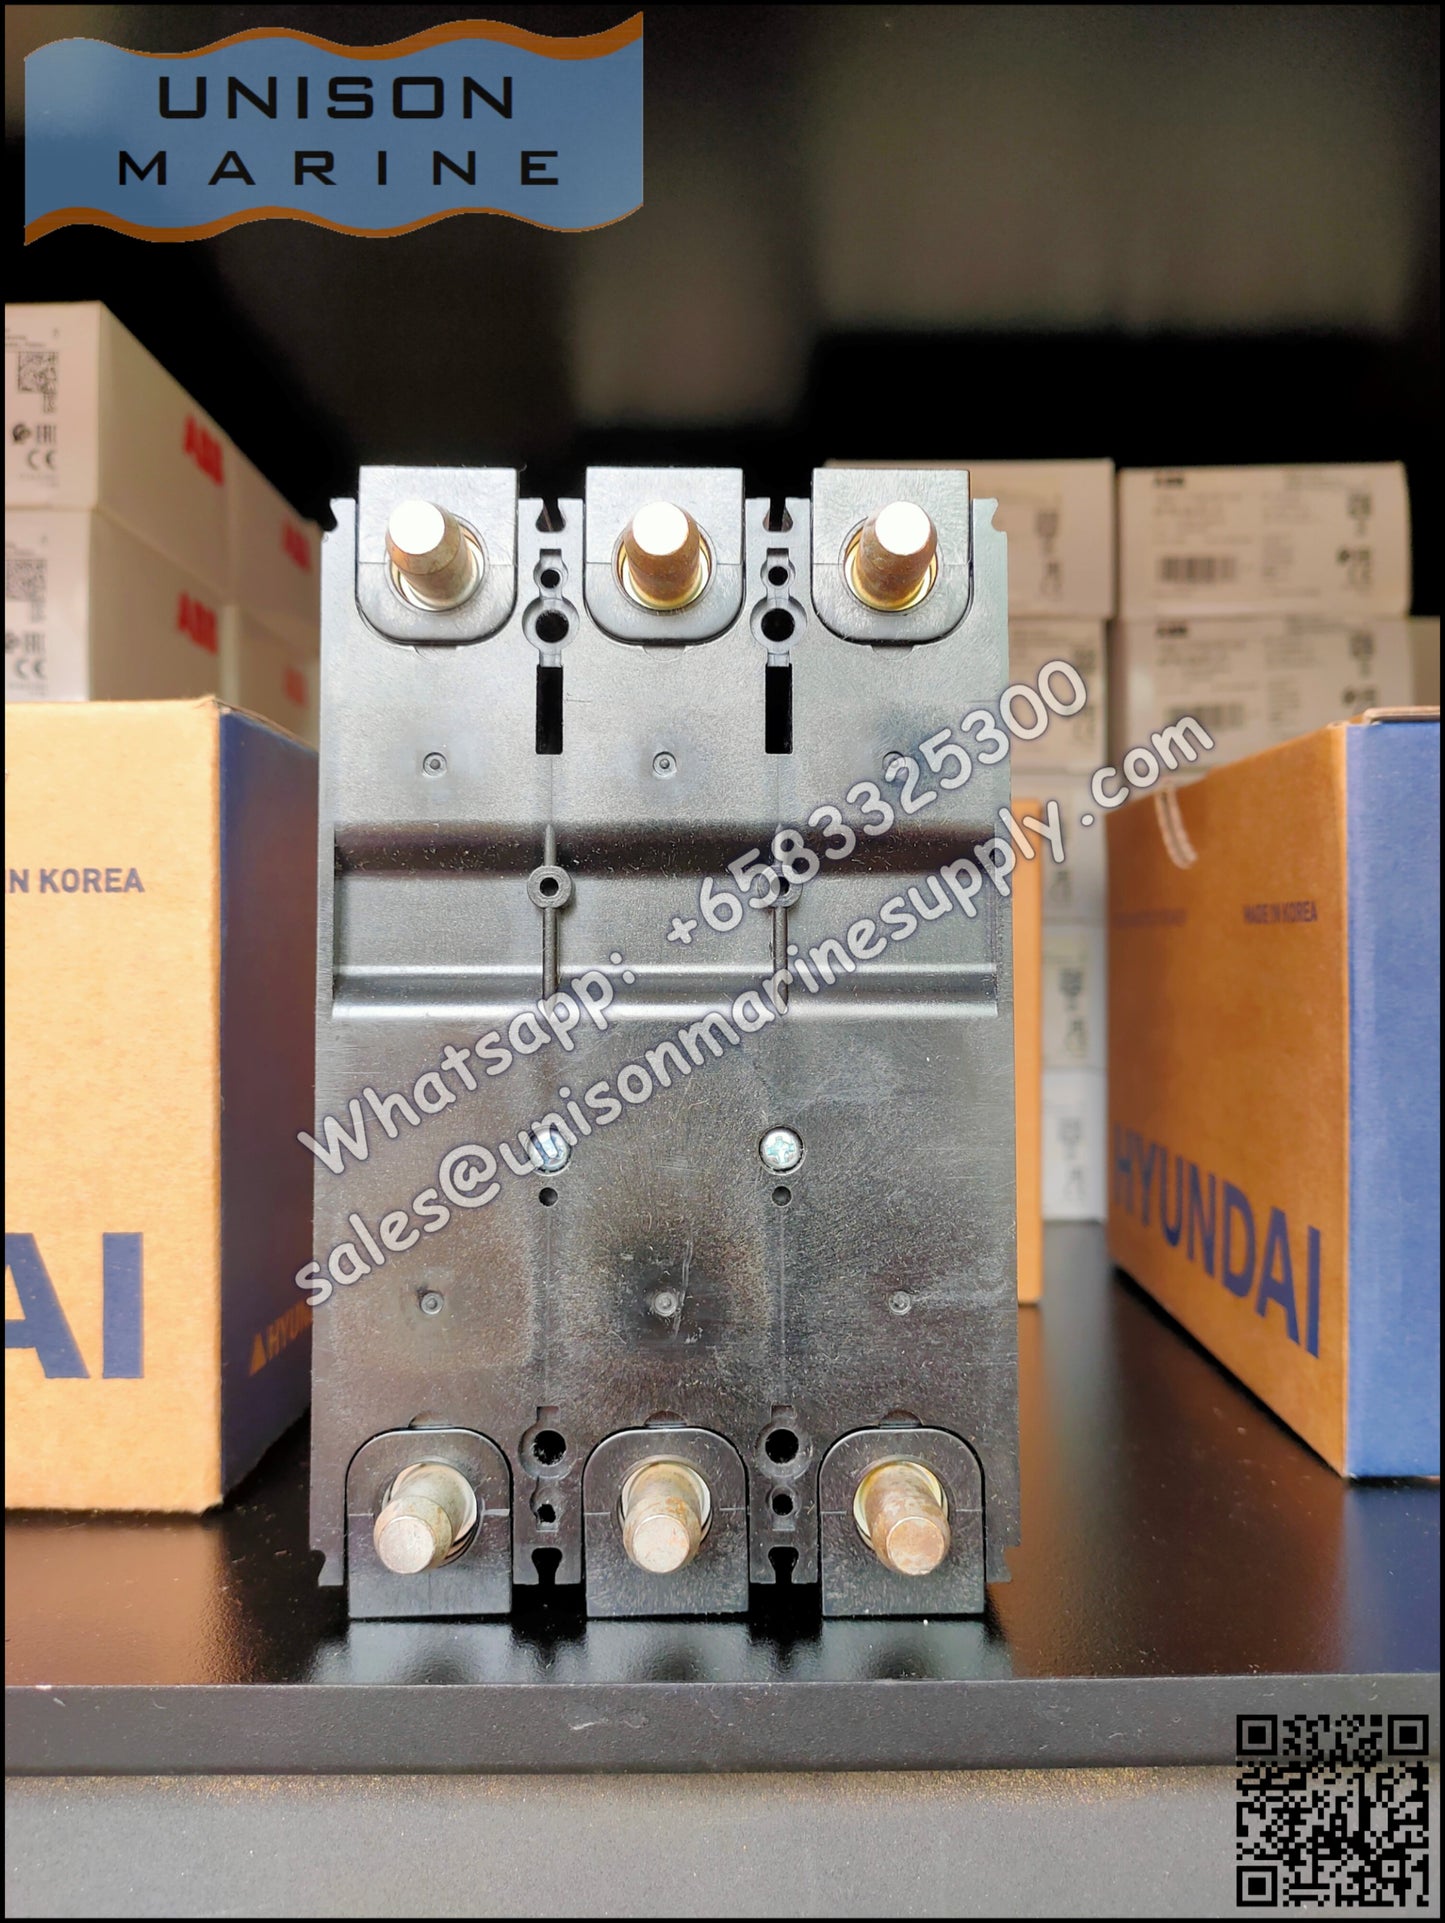 Hyundai Marine Circuit Breaker (MCCB) - HGP125DH 3P Fixed / Plug-in Type